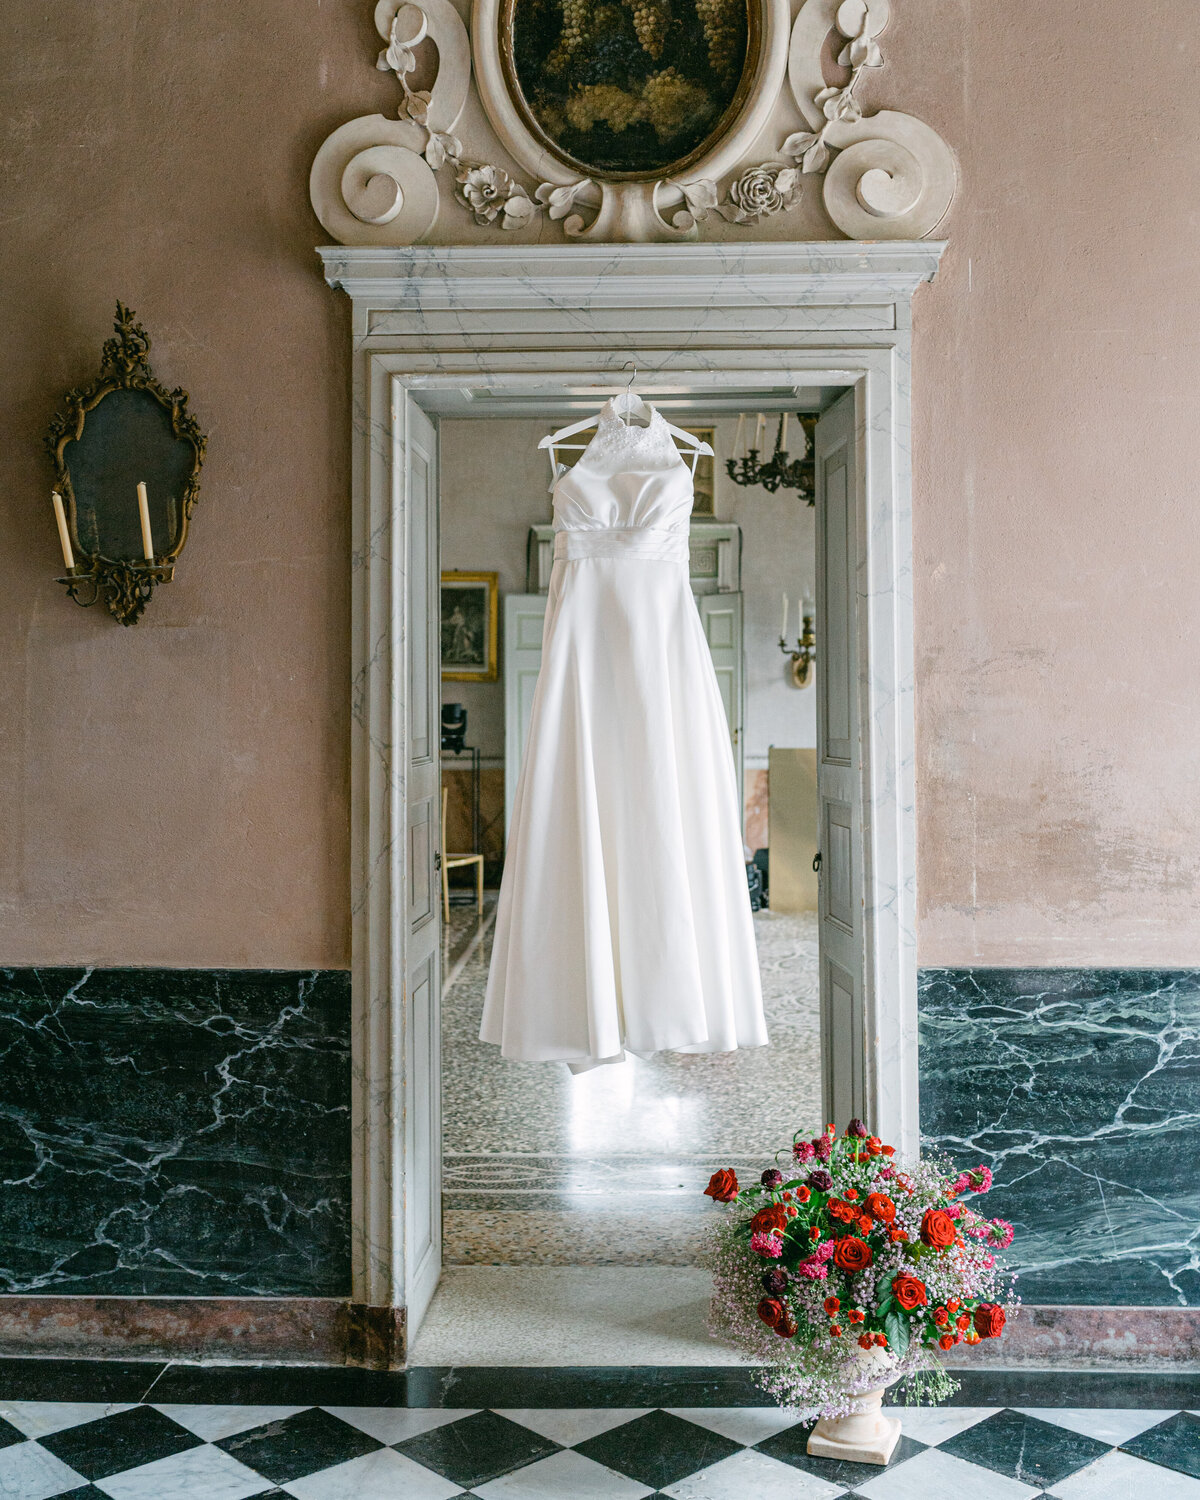 Bespoke wedding dress and flowers at Lake Como wedding venue Villa Pizzo